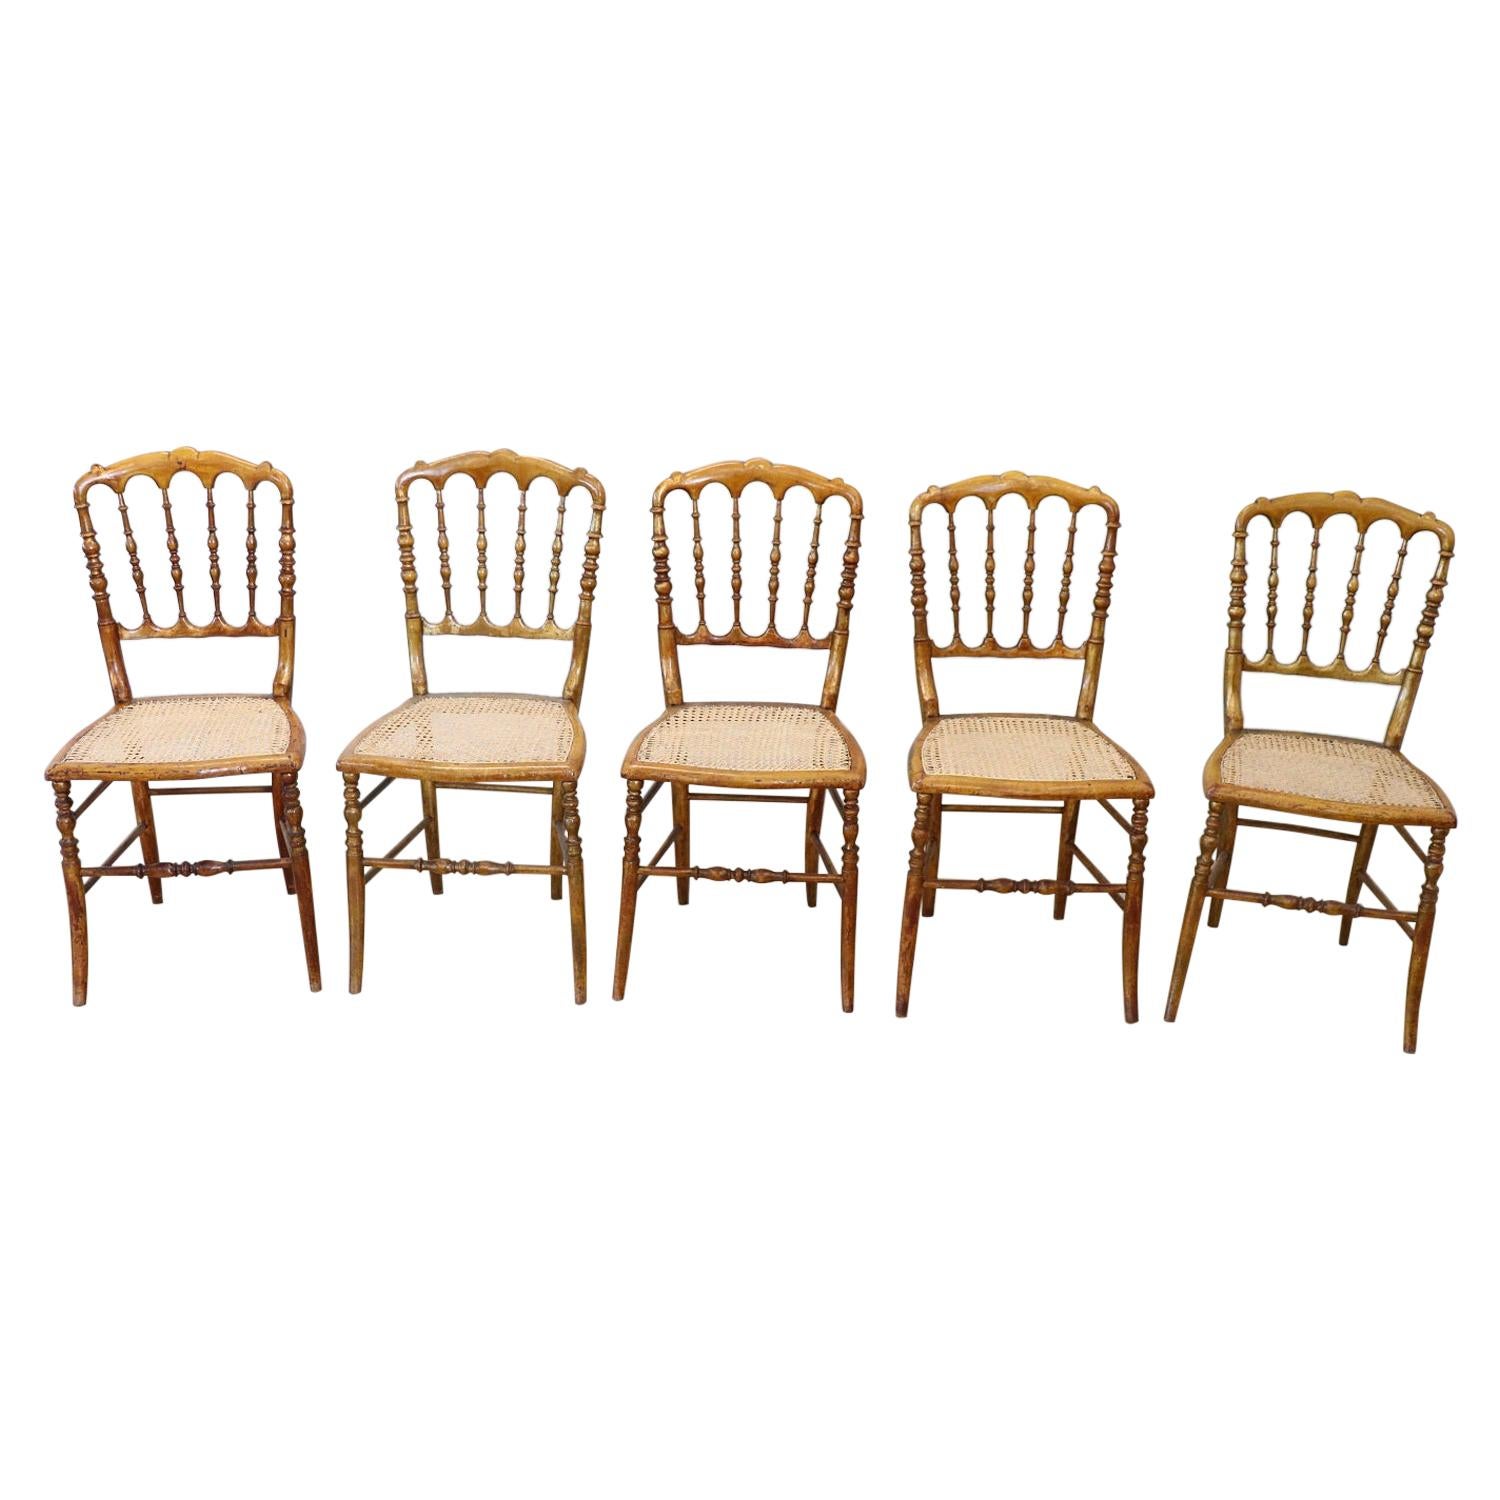 19th Century Italian Set of Five Turned Wood Famous Chiavari Chairs